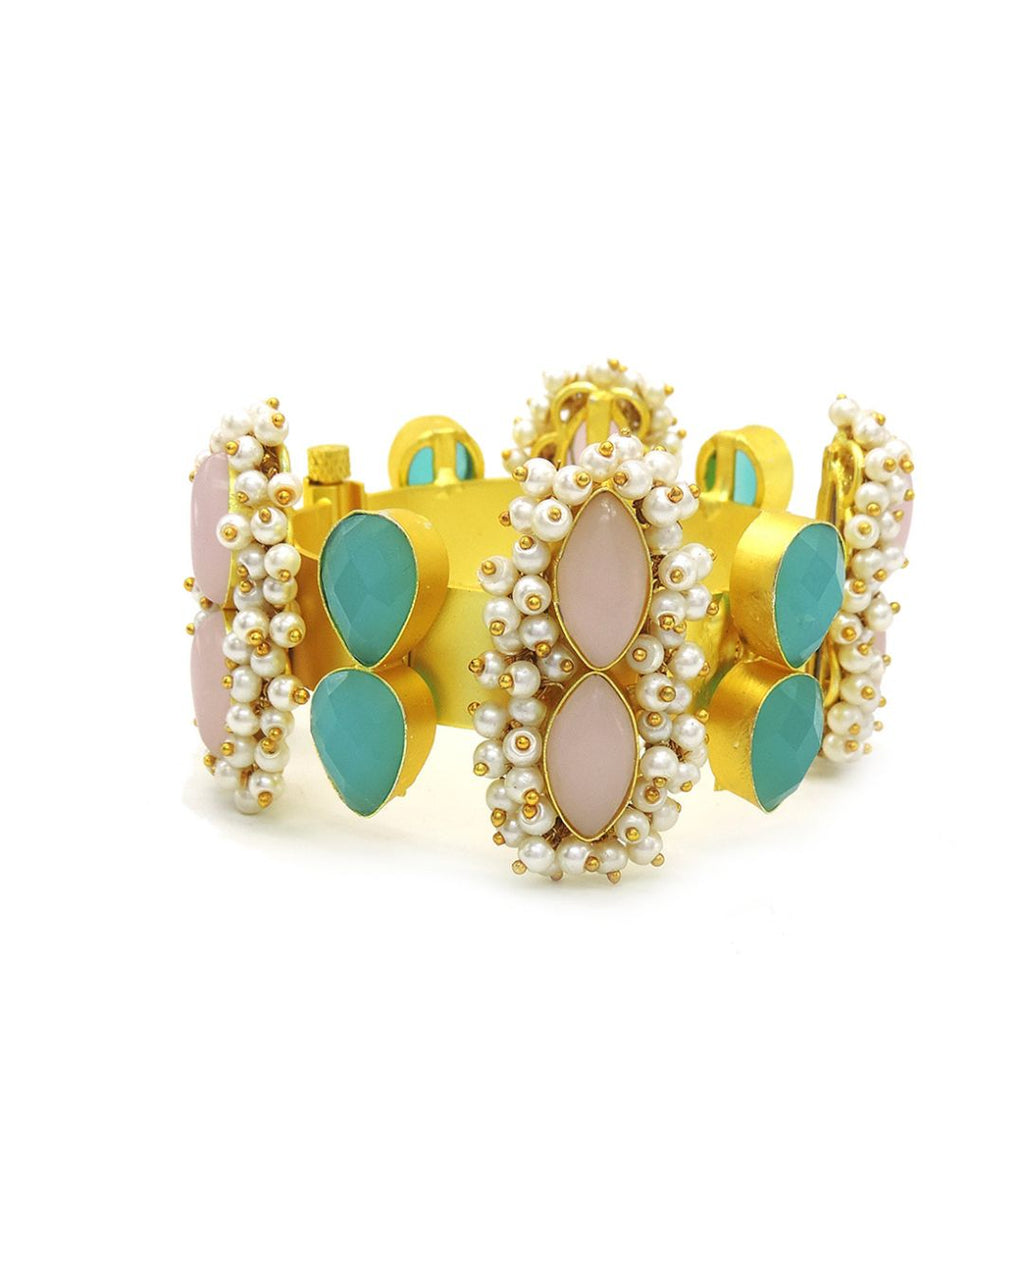 Delia Hoop Earrings - Earrings - Handcrafted Jewellery - Made in India - Dubai Jewellery, Fashion & Lifestyle - Dori